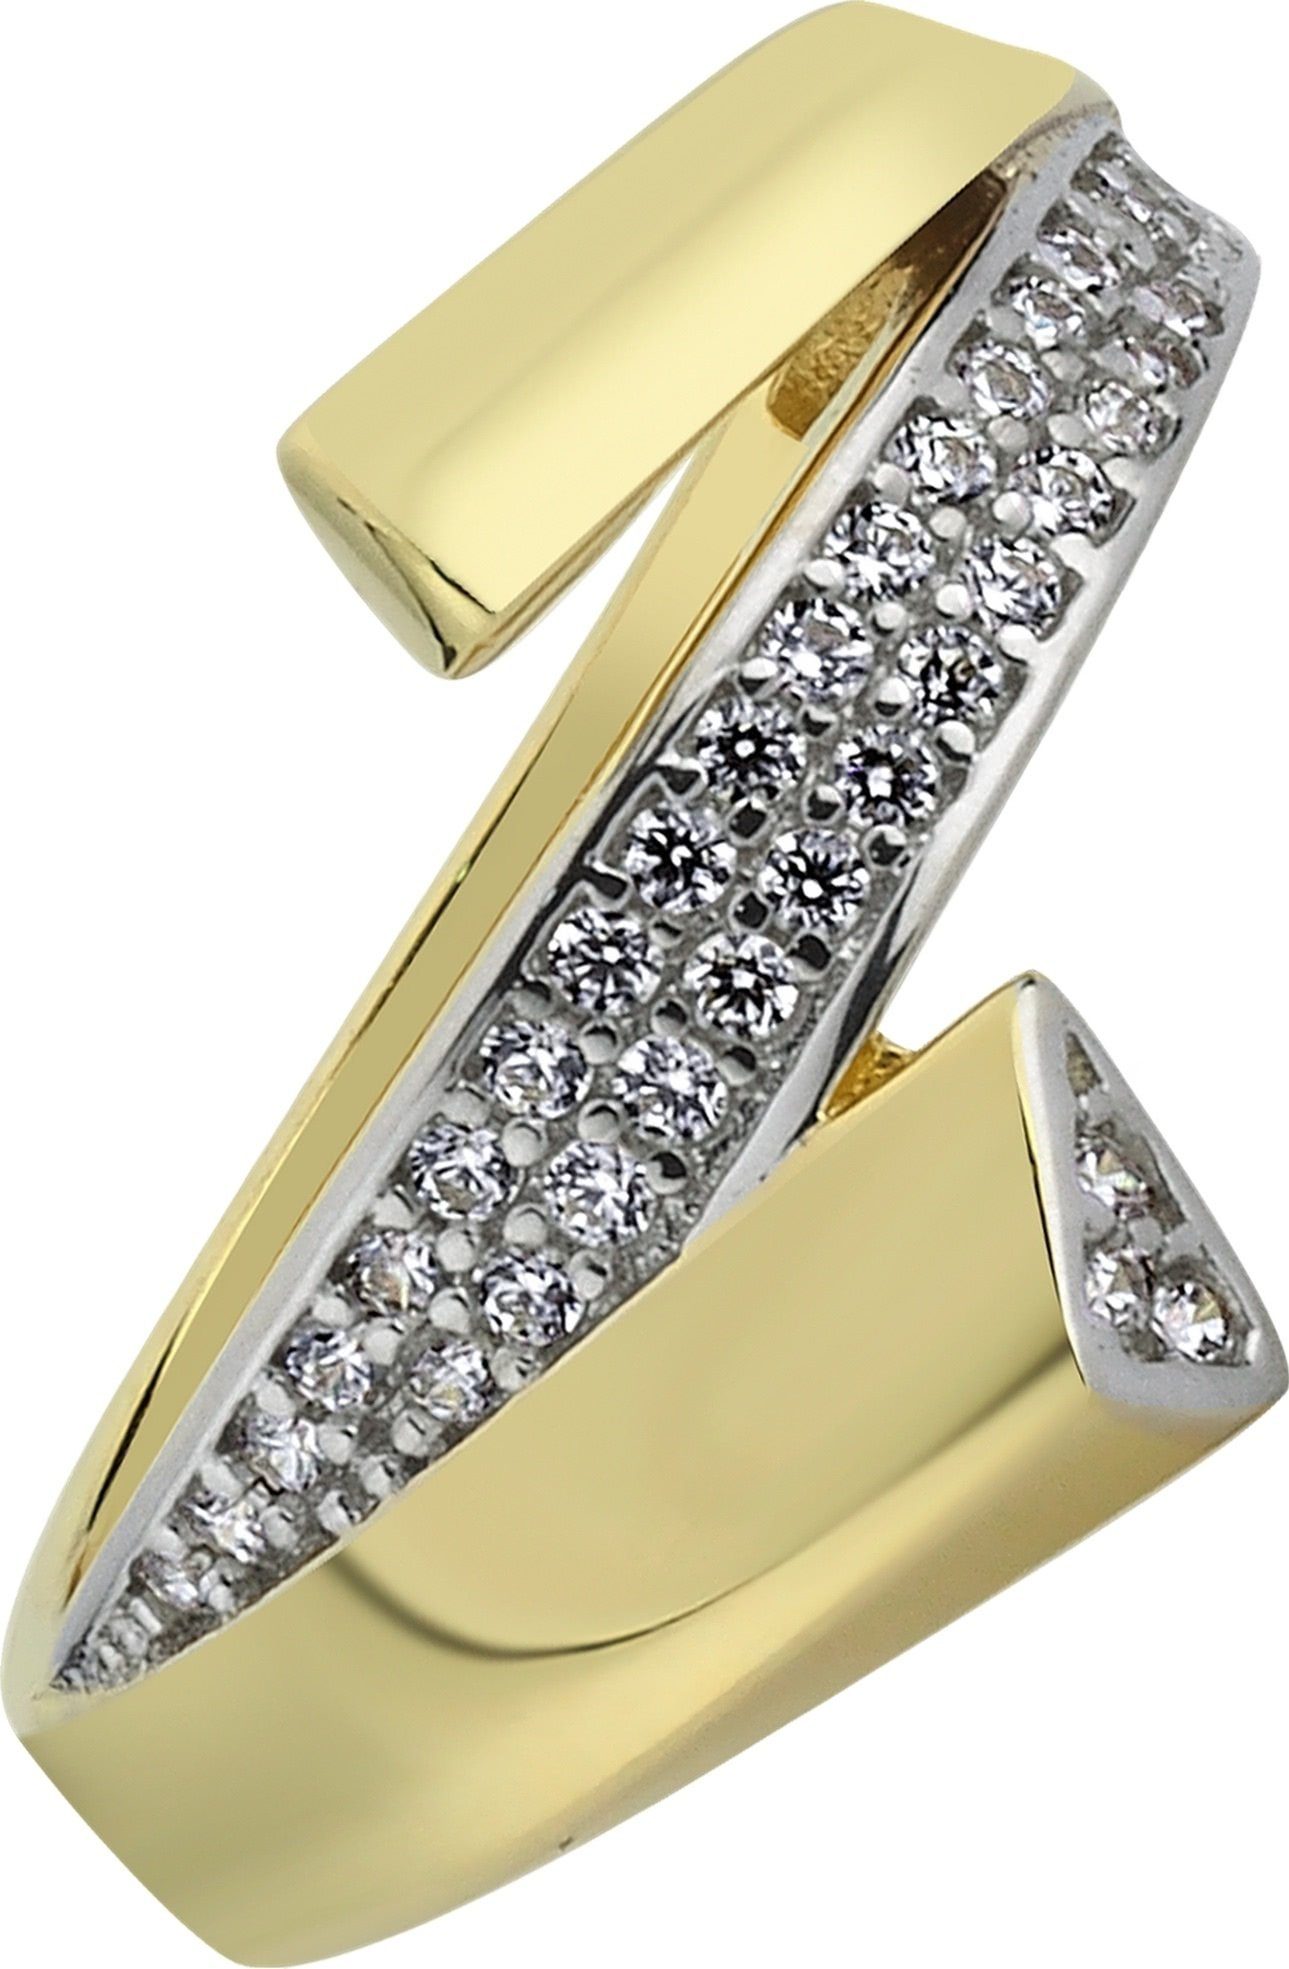 Balia Goldring Balia Damen Ring Gelbgold 8Karat Gr.56 (Fingerring), Damen Ring Glamour aus 333er Goldgold - 8 Karat, Farbe: weiß, gold